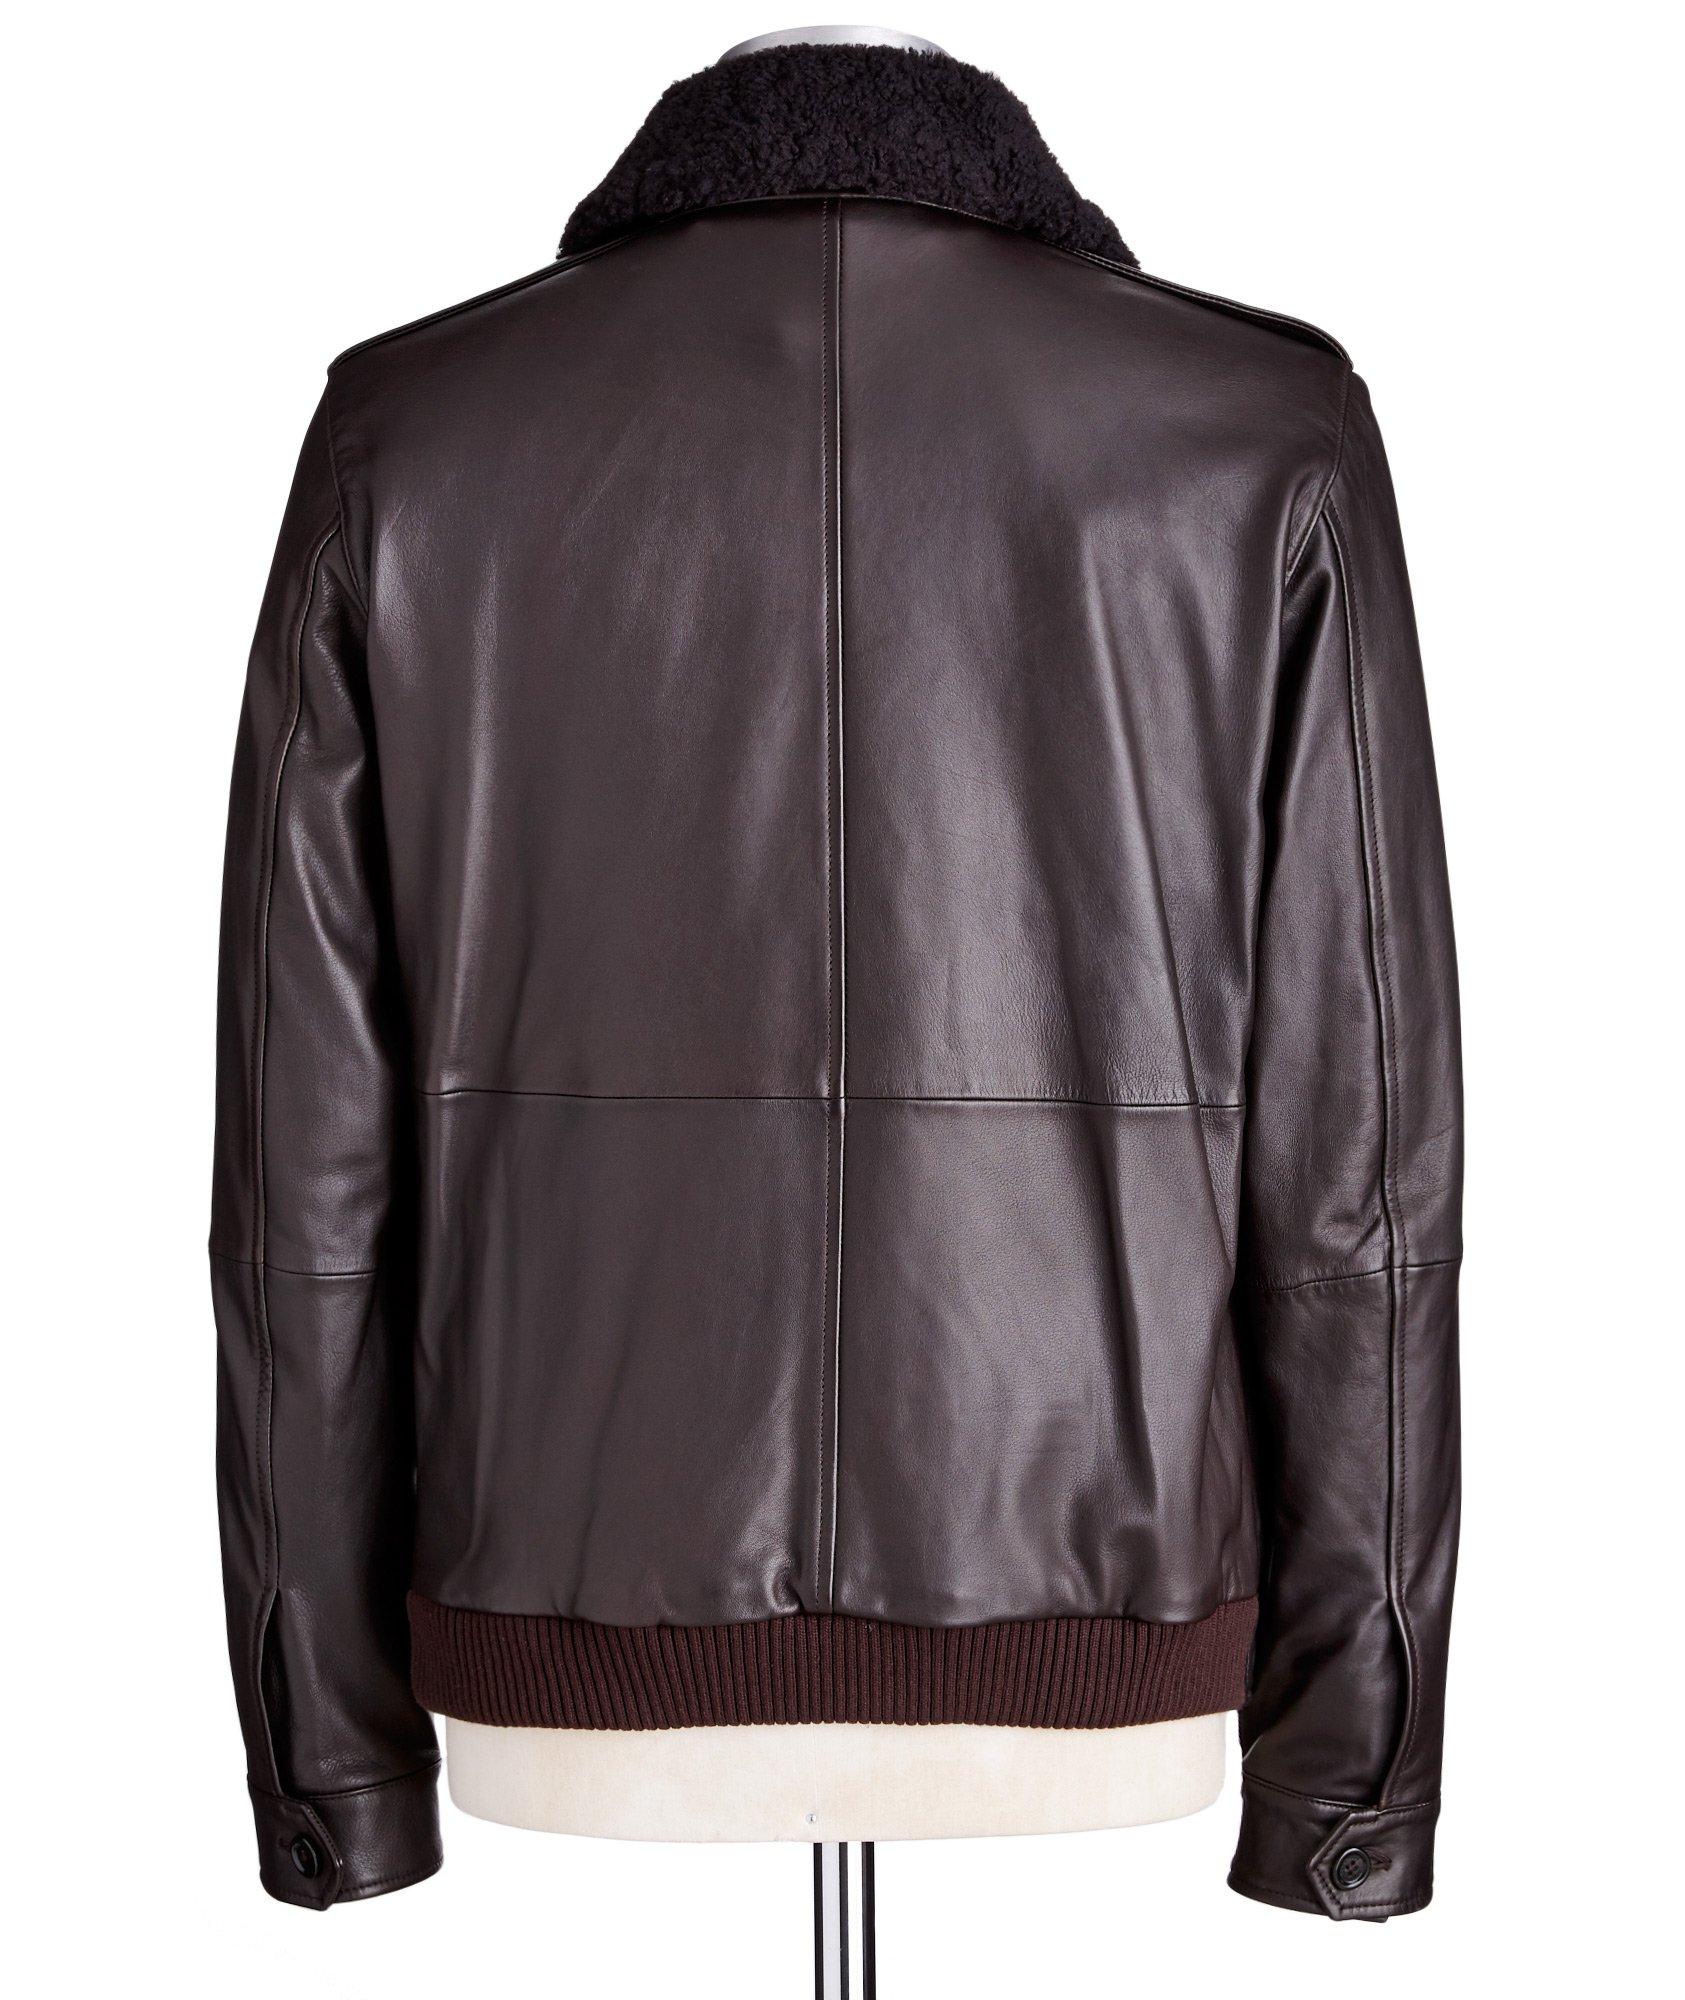 Graven Leather Jacket image 2